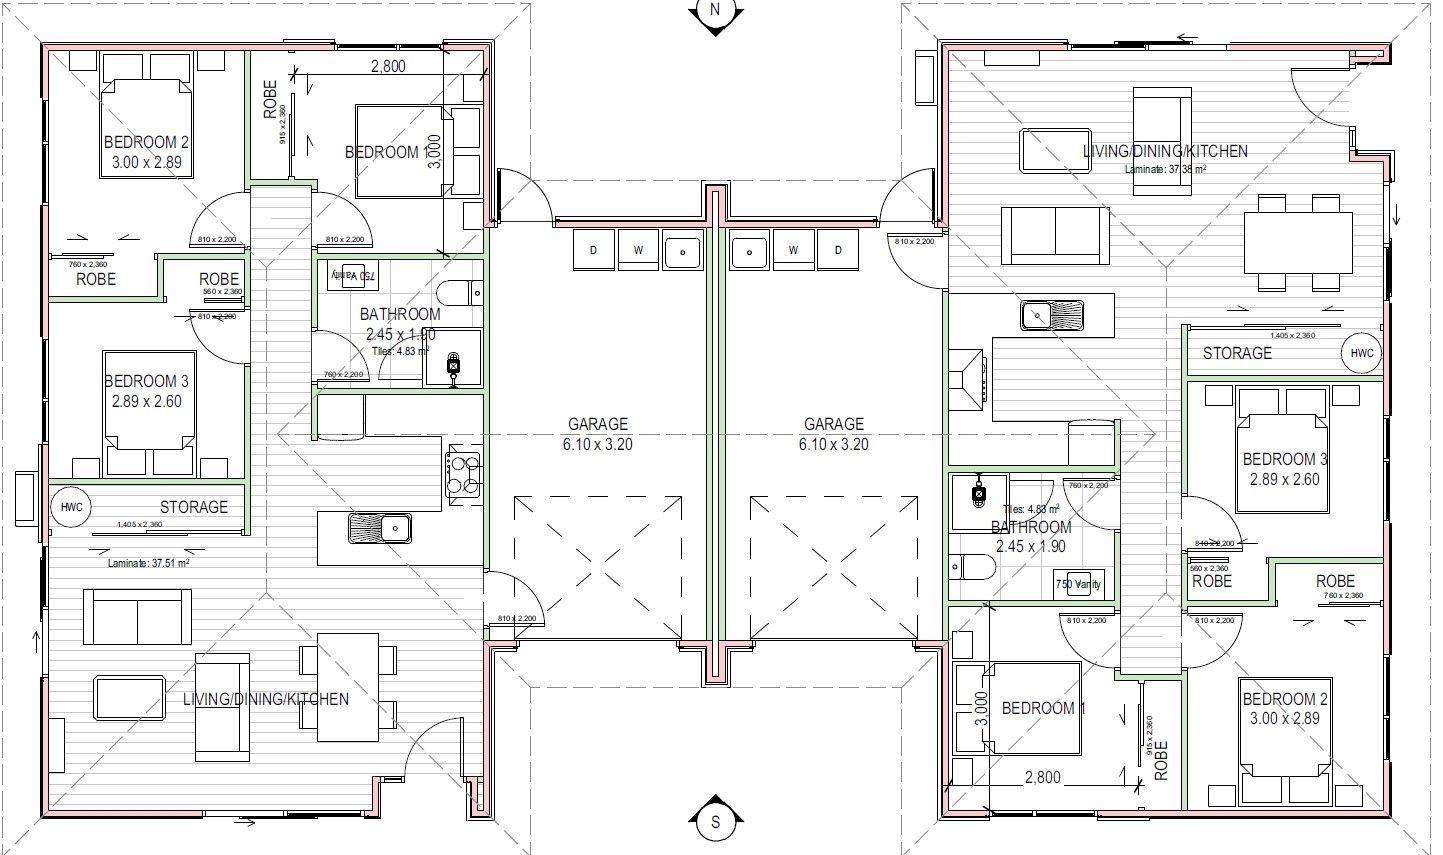 Lot 613 Acland Park floor plan